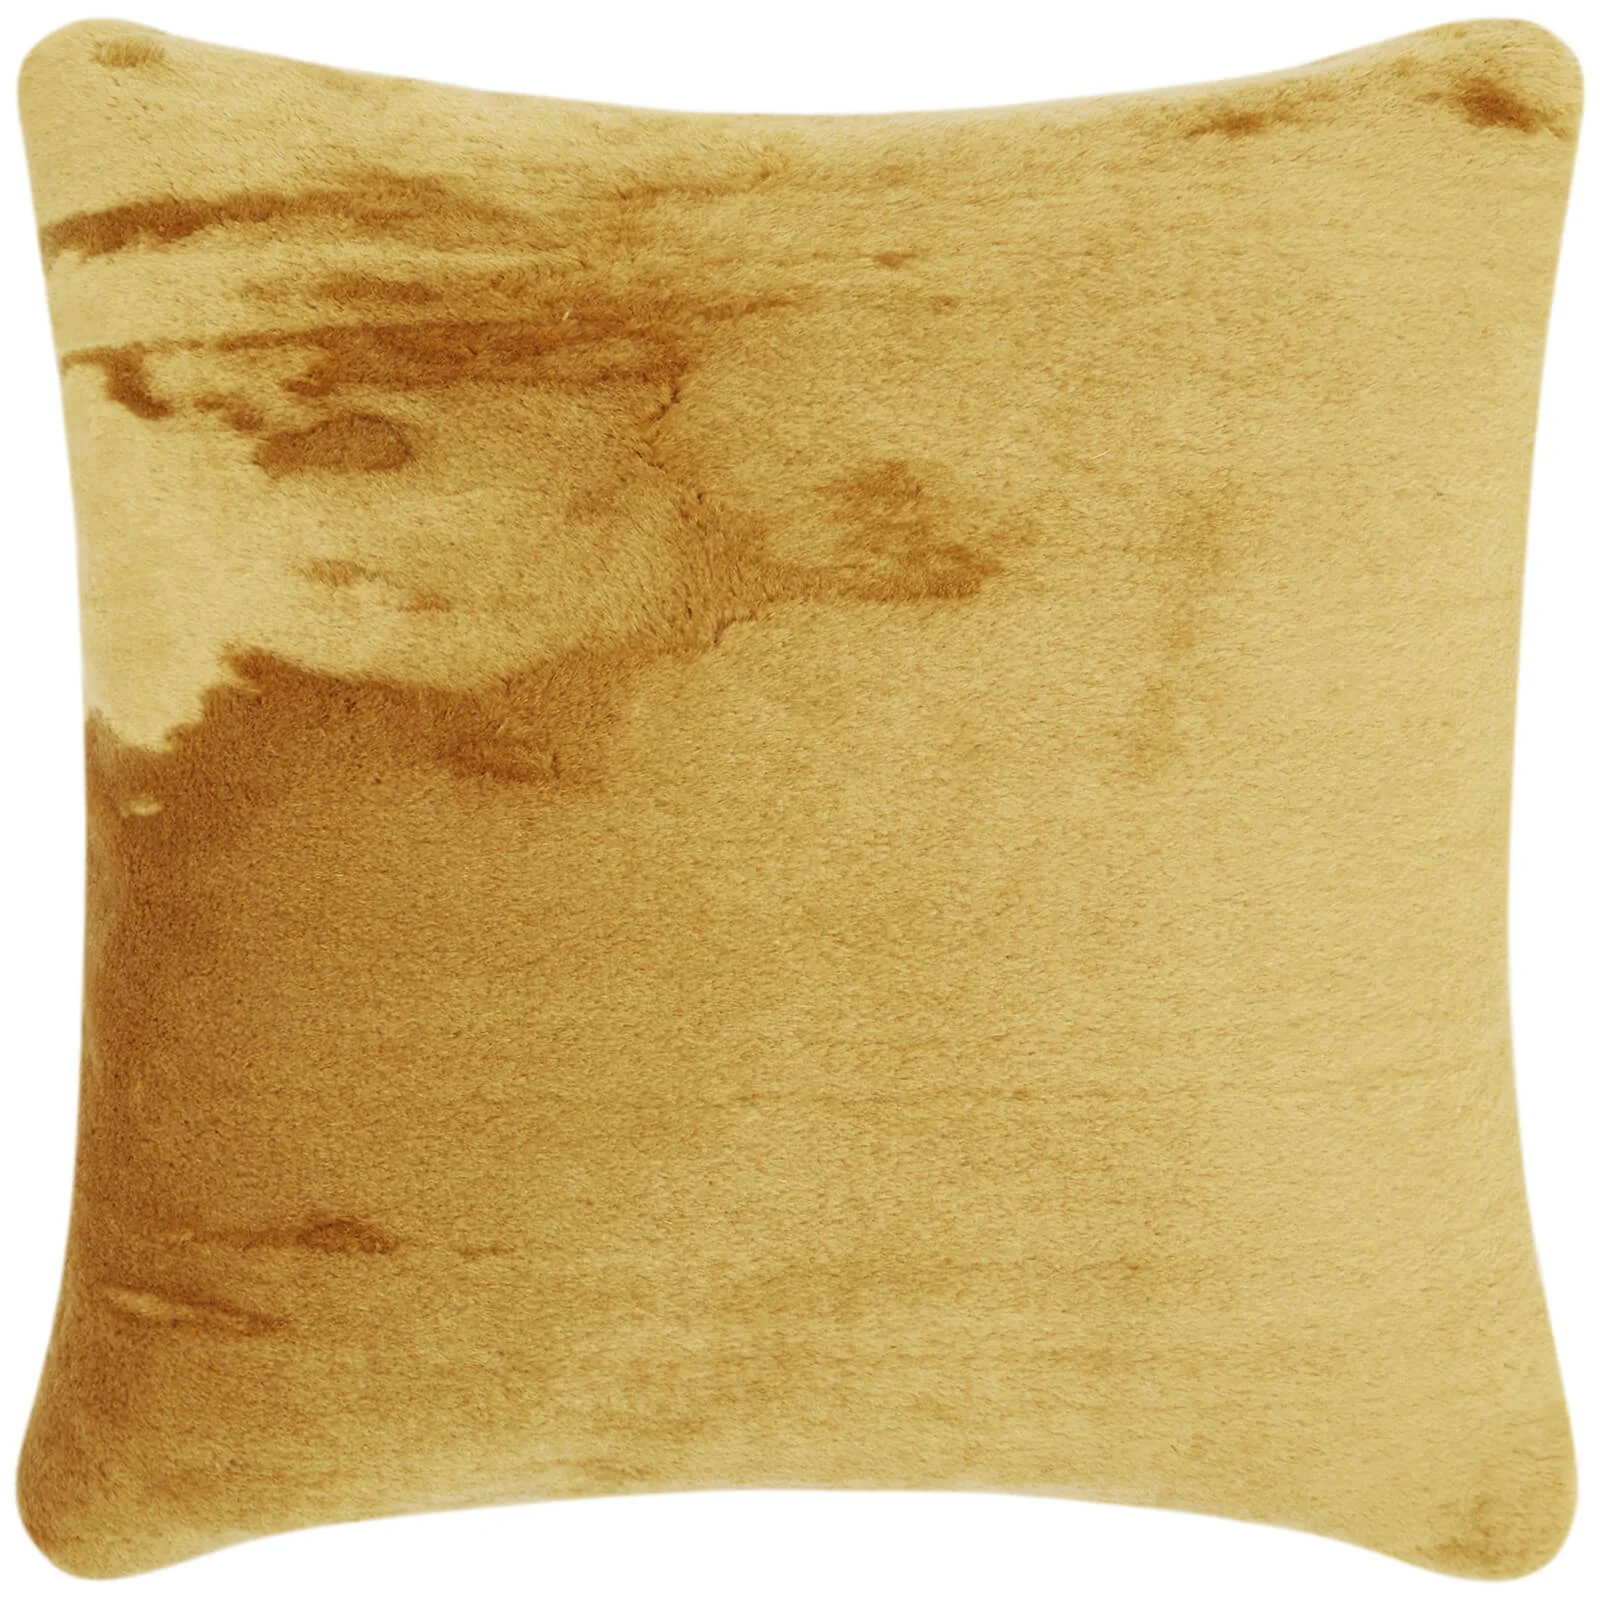 Tom Dixon Soft Cushion - 43 x 43cm - Ochre Image 1